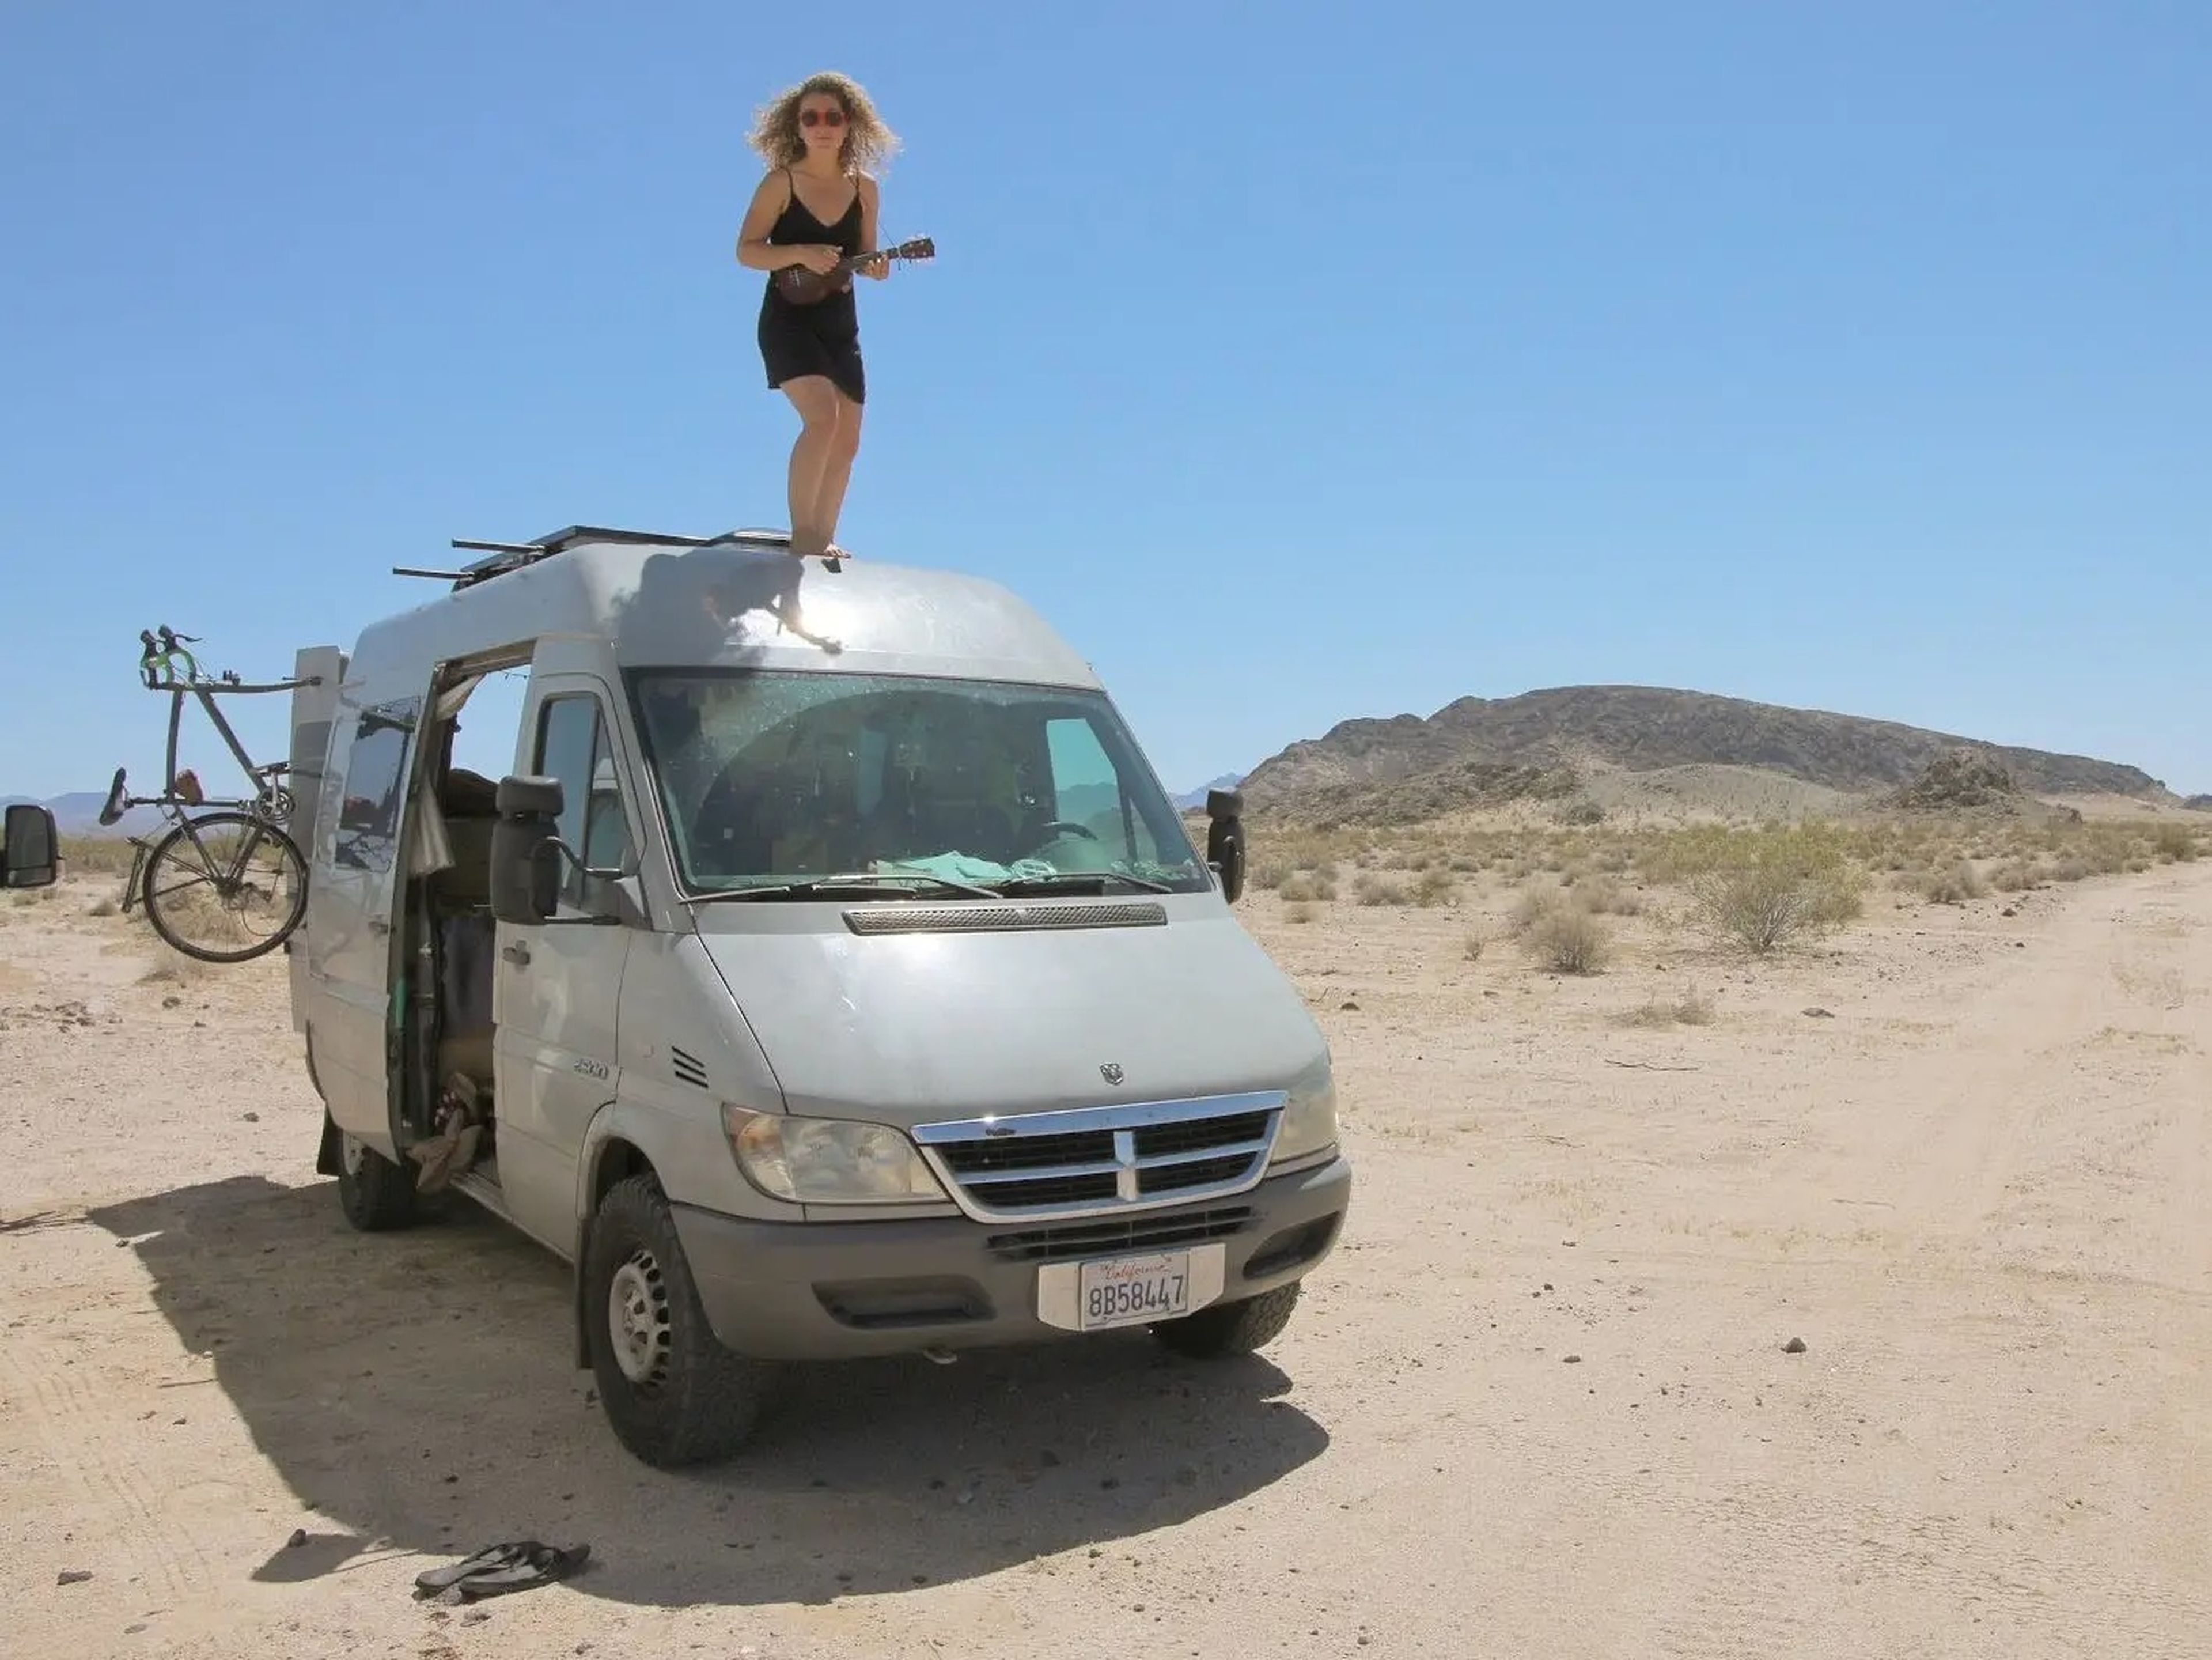 Kaya Lindsay standing ontop of van in desert